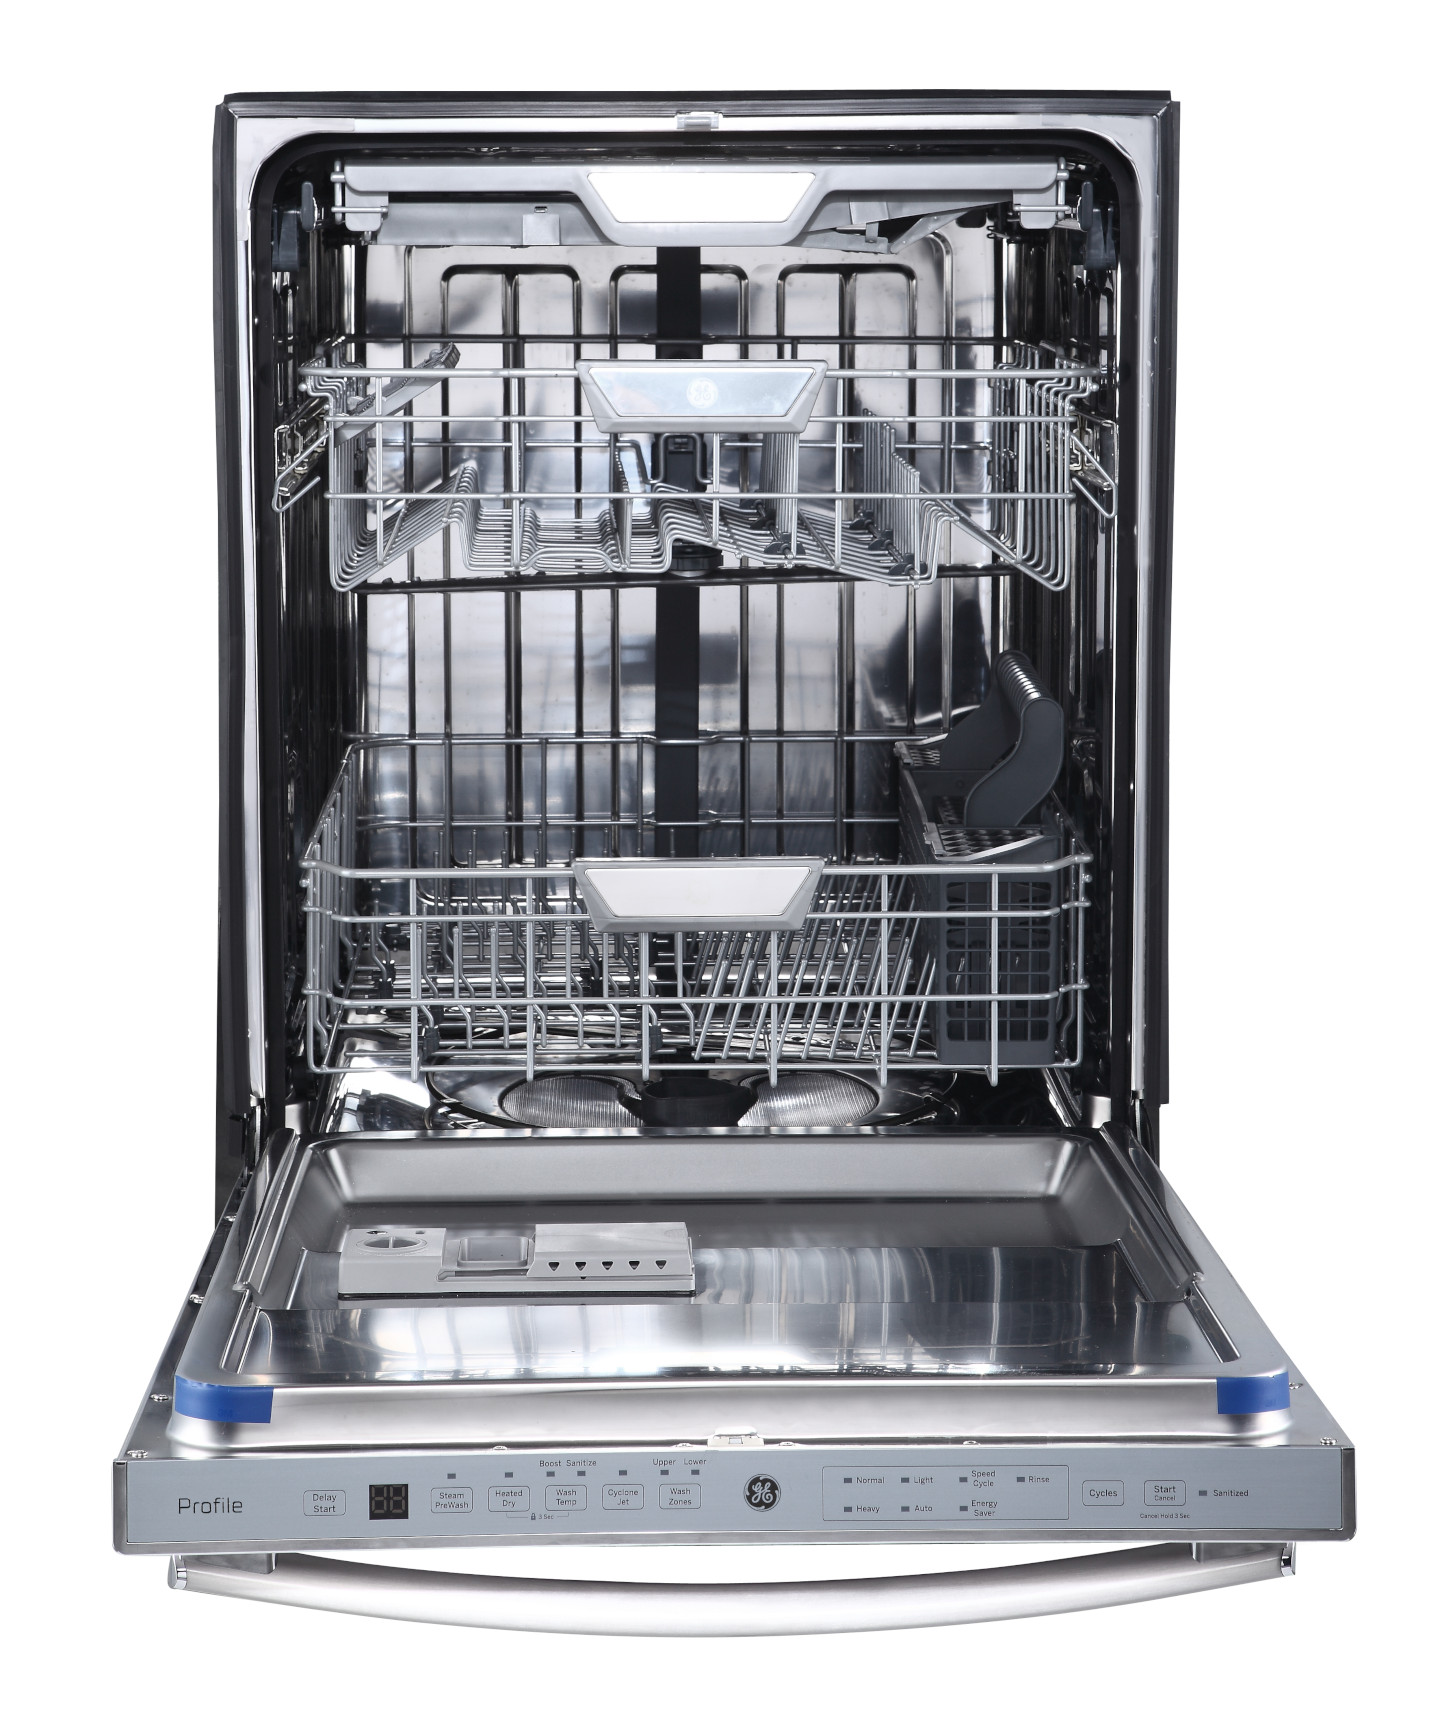 dishwasher stainless steel